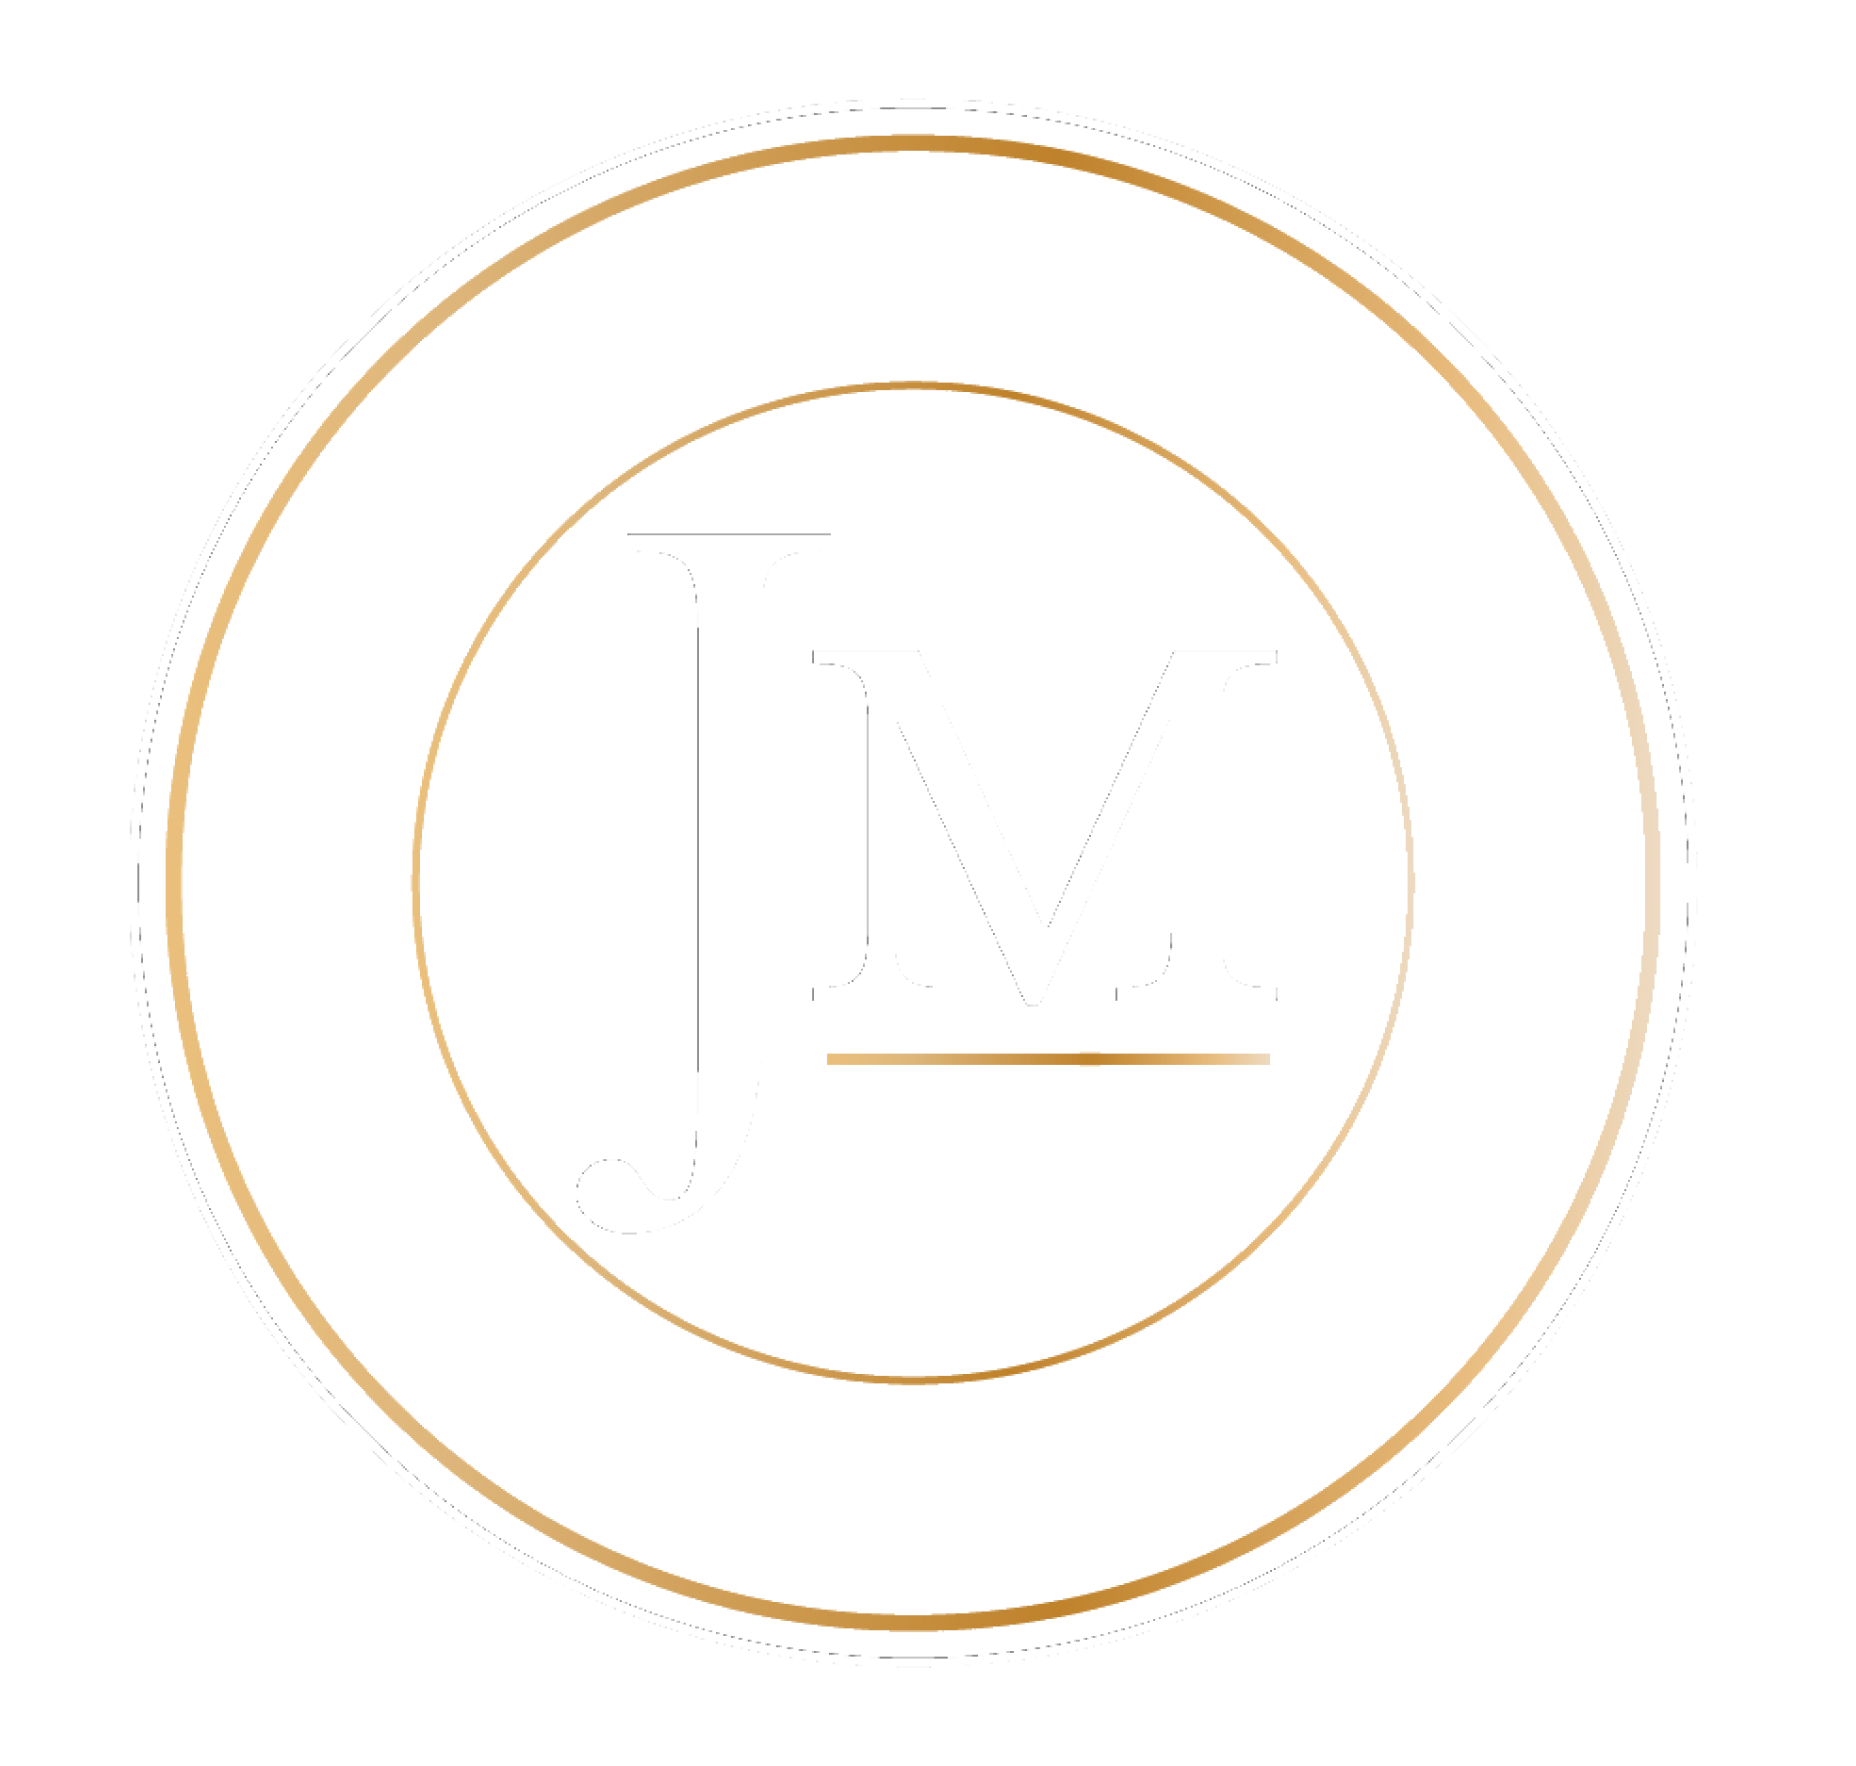 James McCloskey Real Estate Team